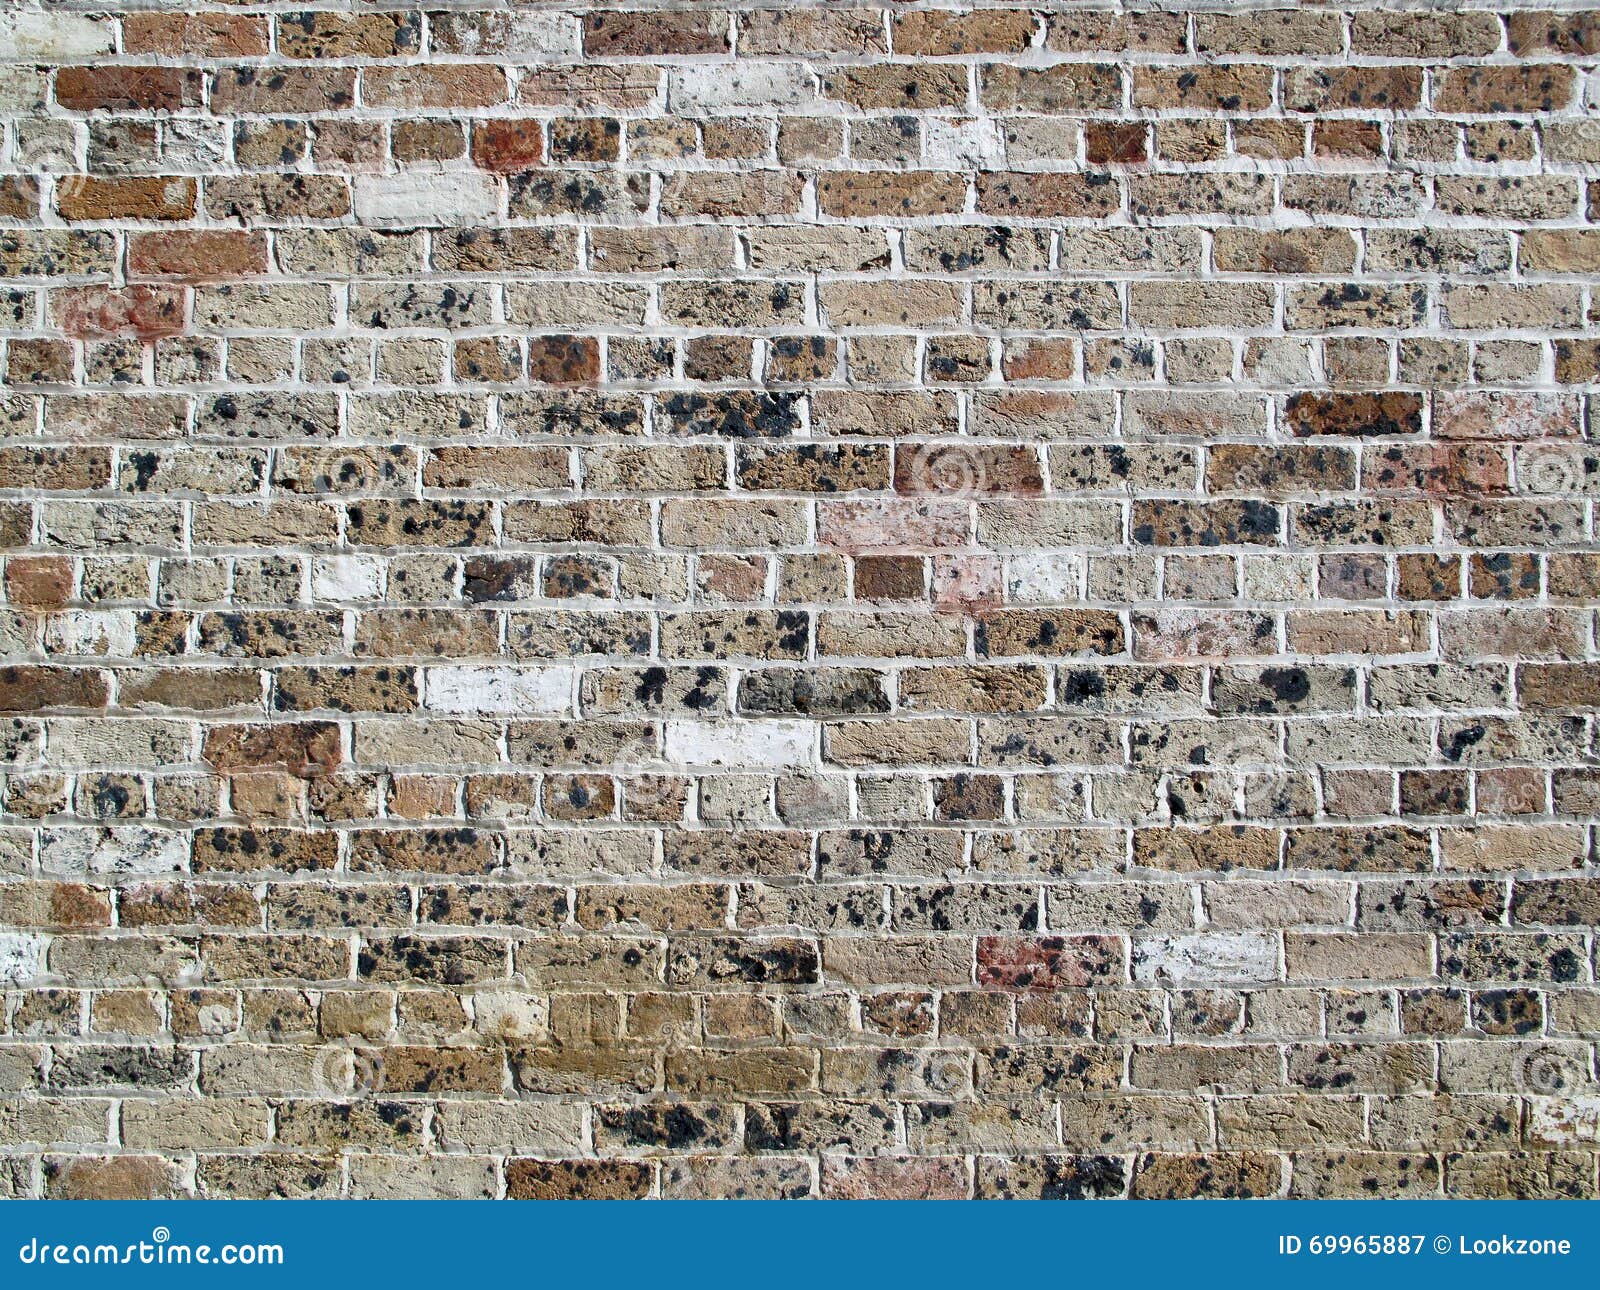 old rustic brick wall